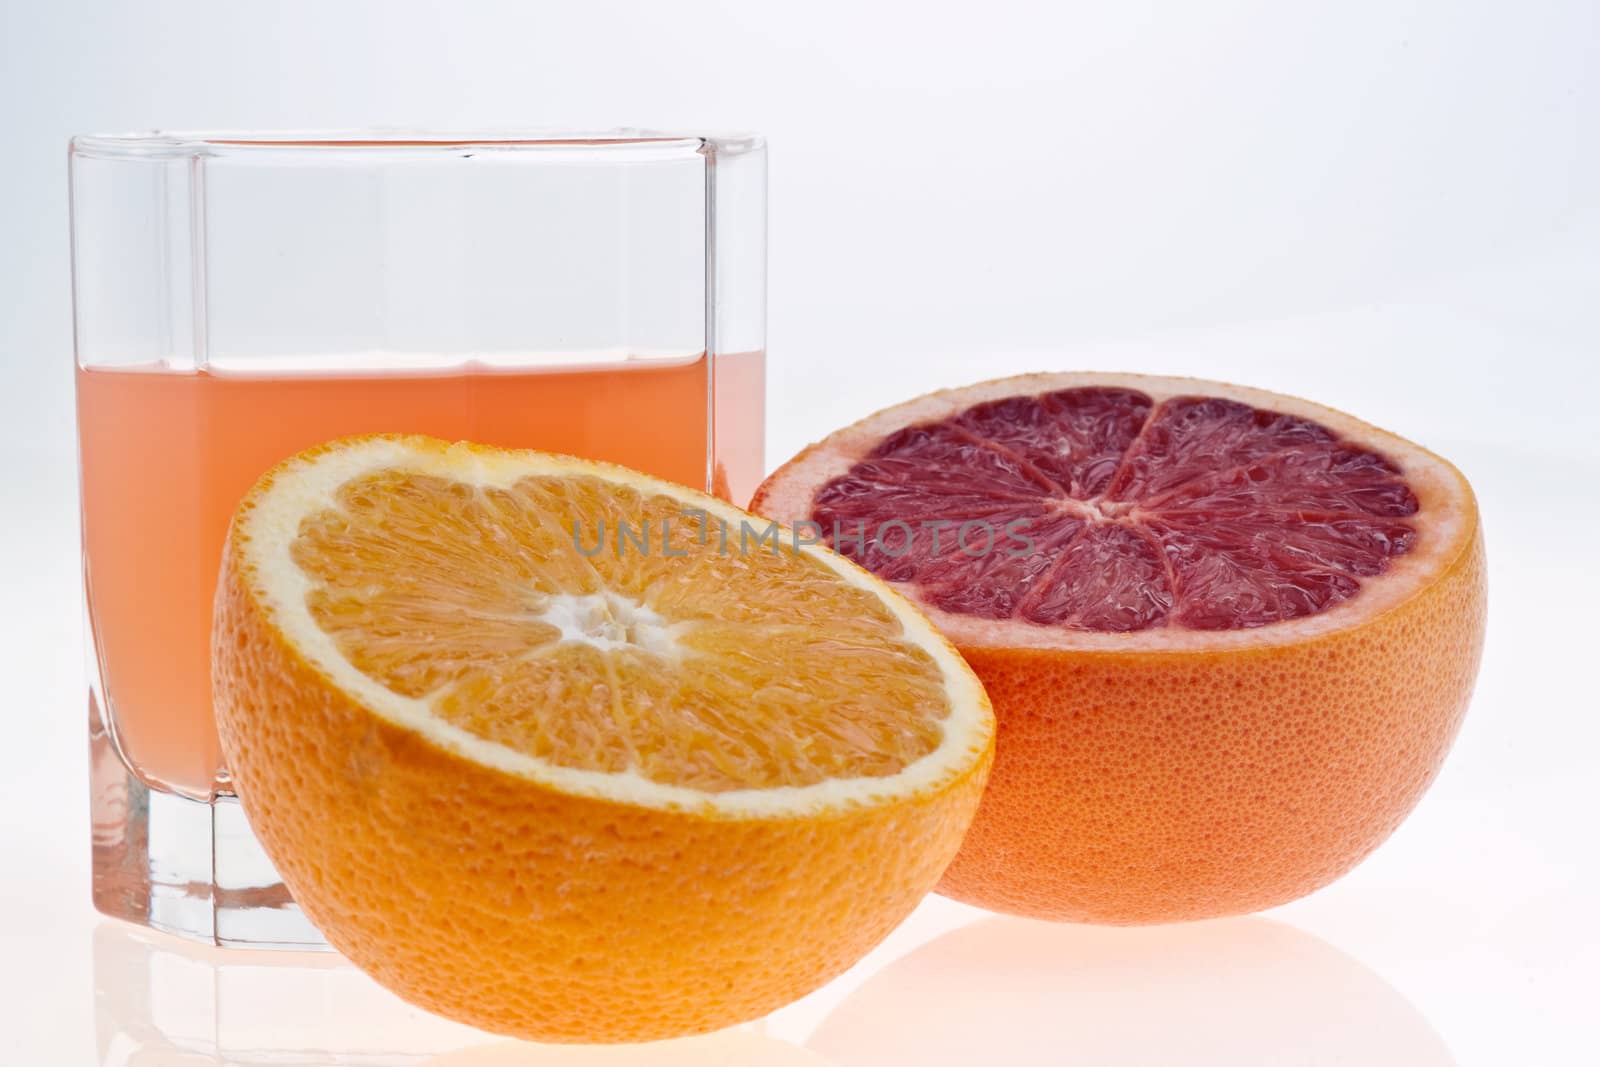 Grapefruit, orange and juice by Marcus